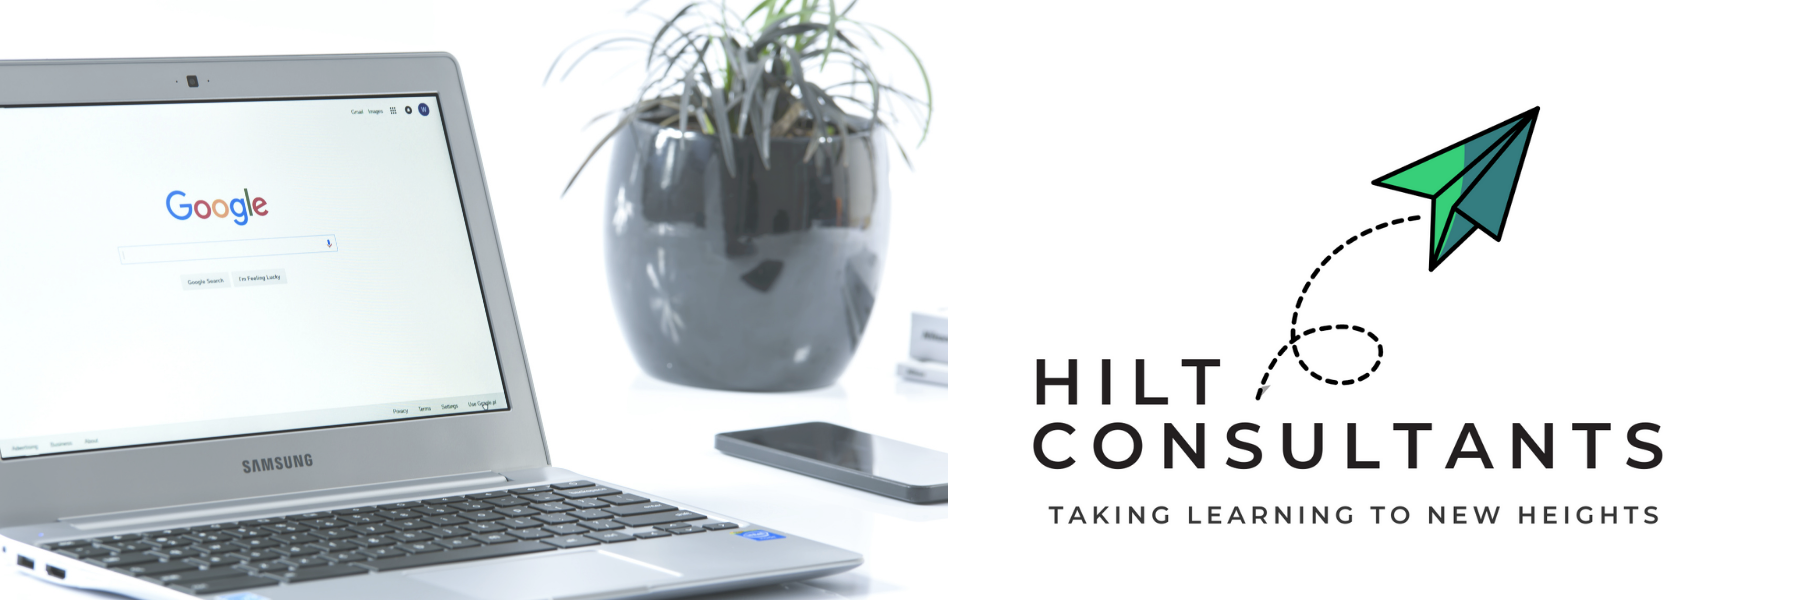 Hilt Consultants website header